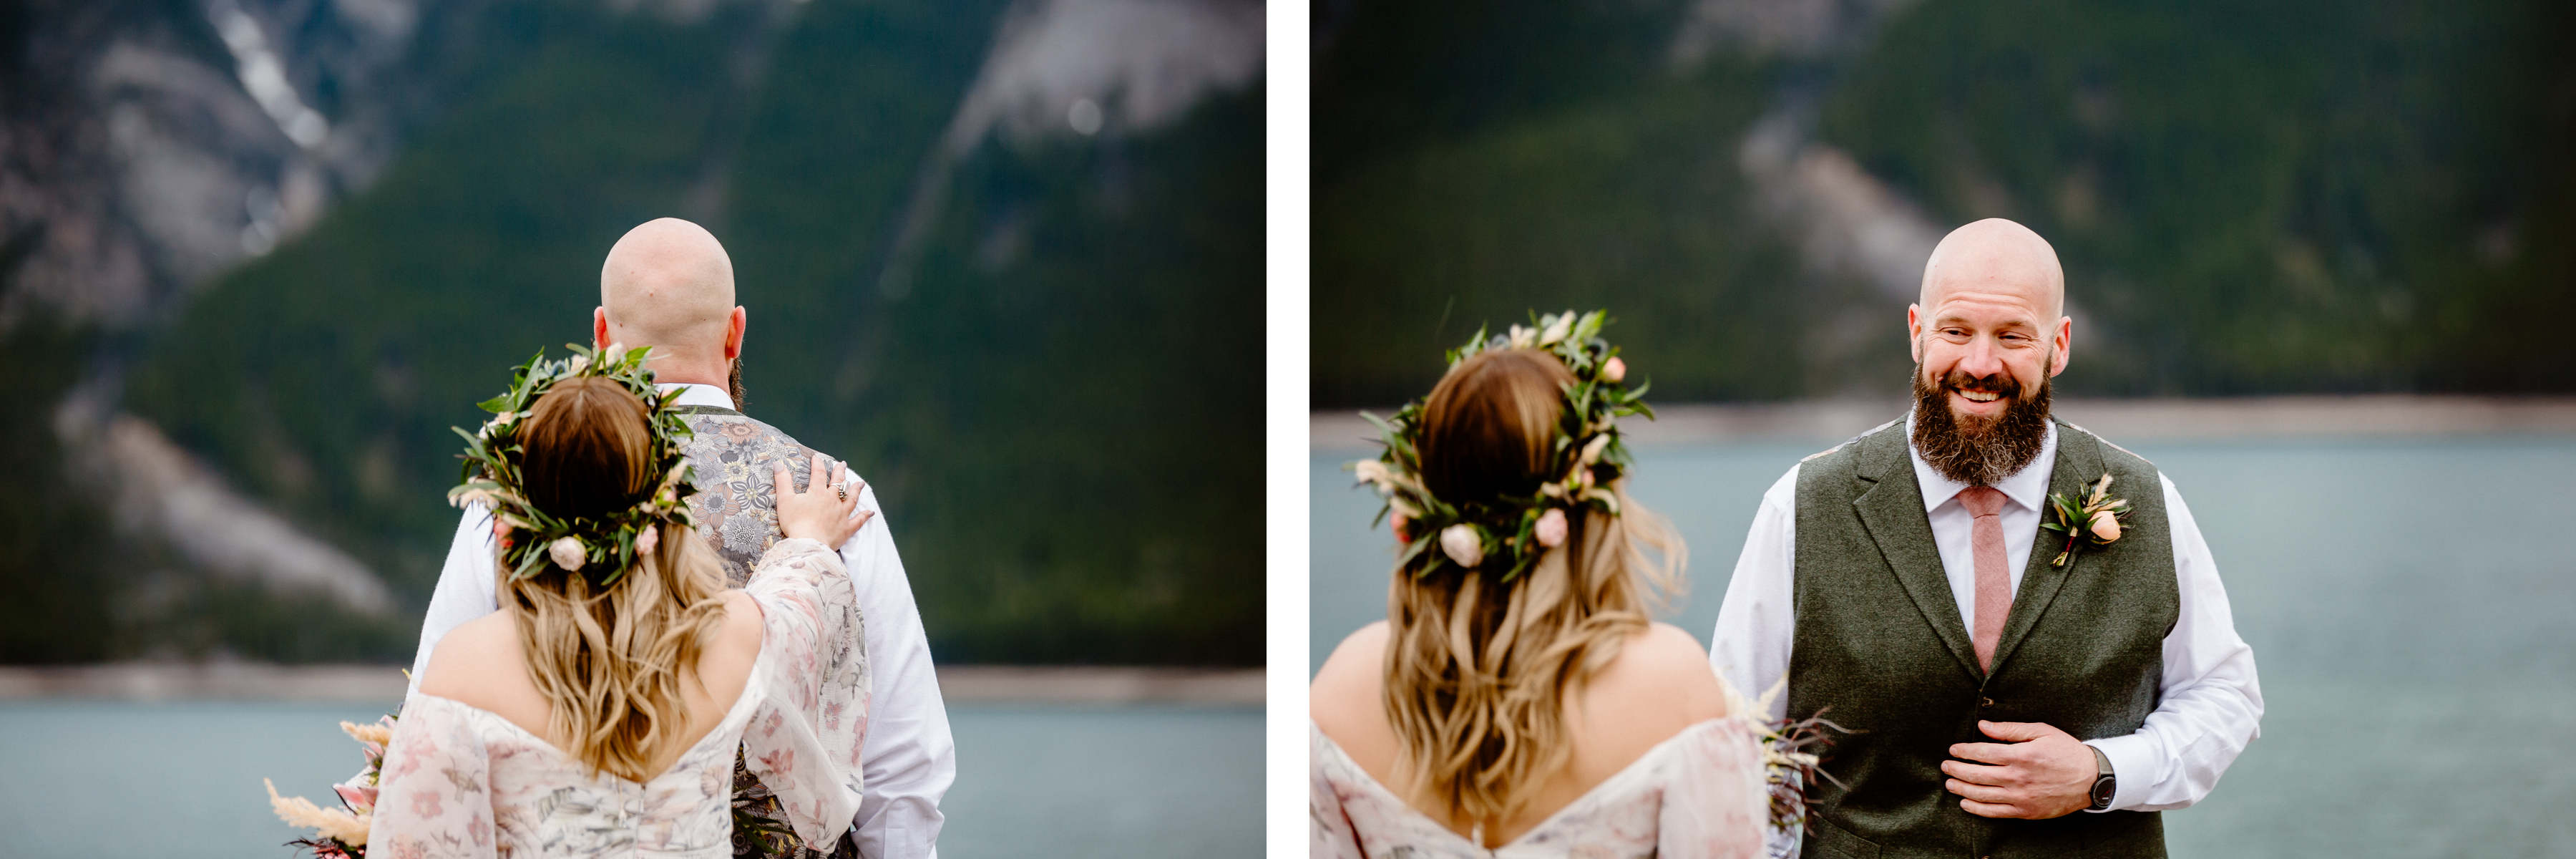 Stormy and Rainy Banff Wedding Photography - Photo 6